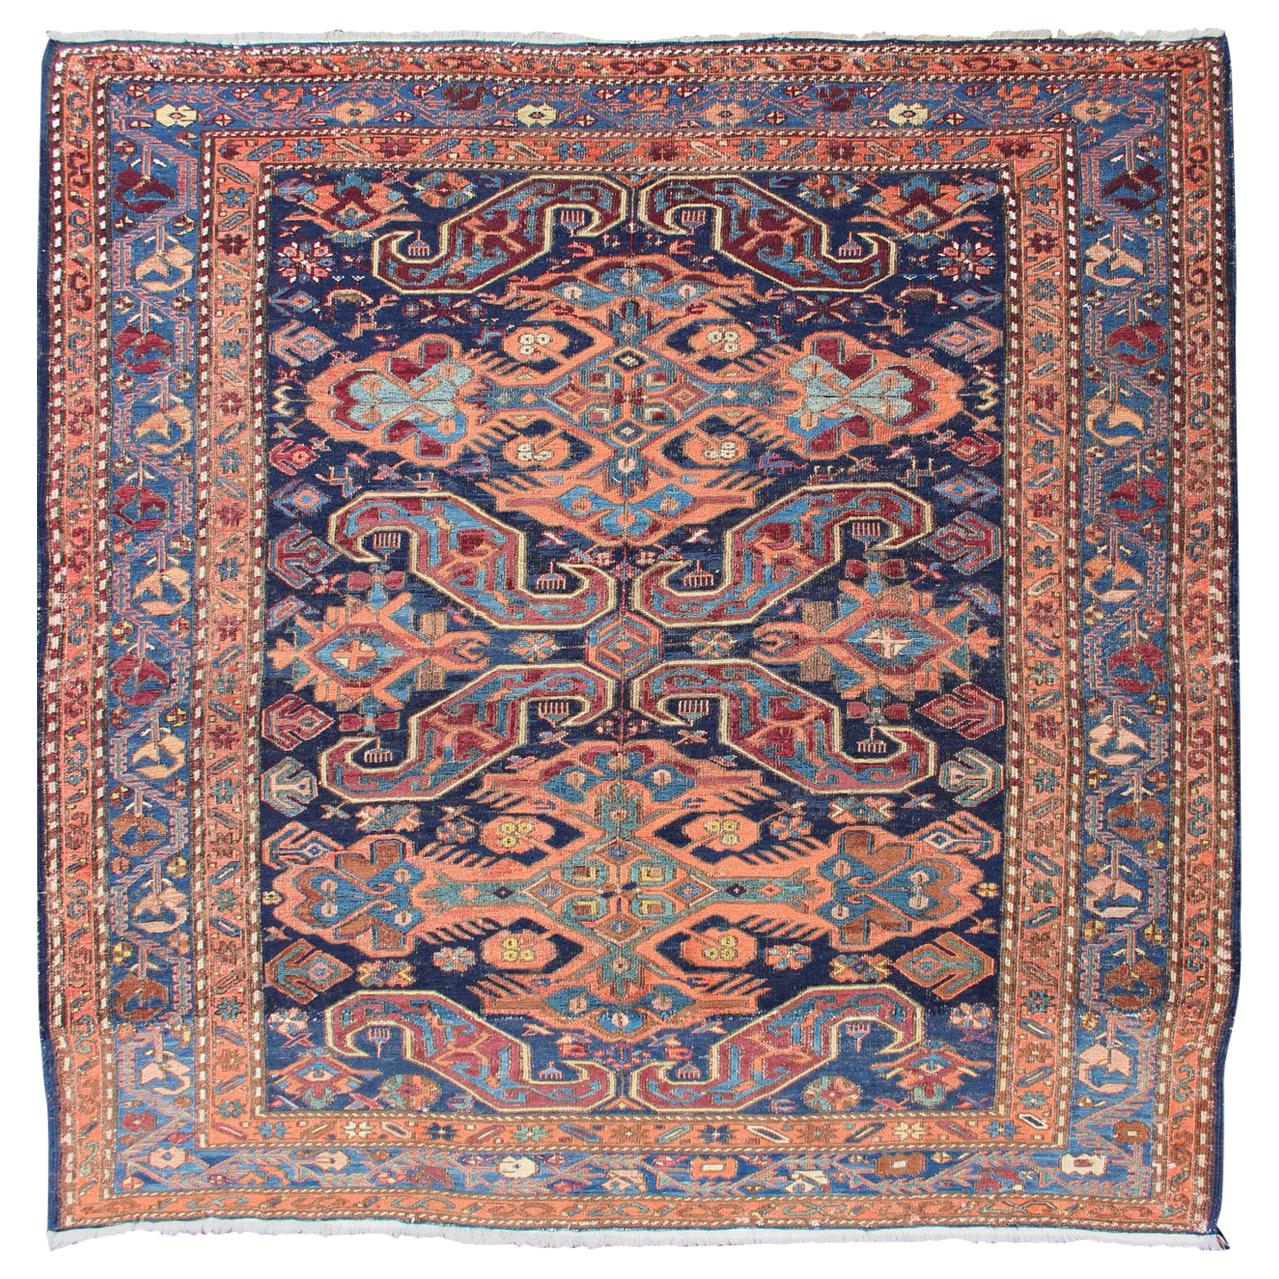 Antique Caucasian 19th Century Sumac Rug in Varying Colors of Orange and Blue